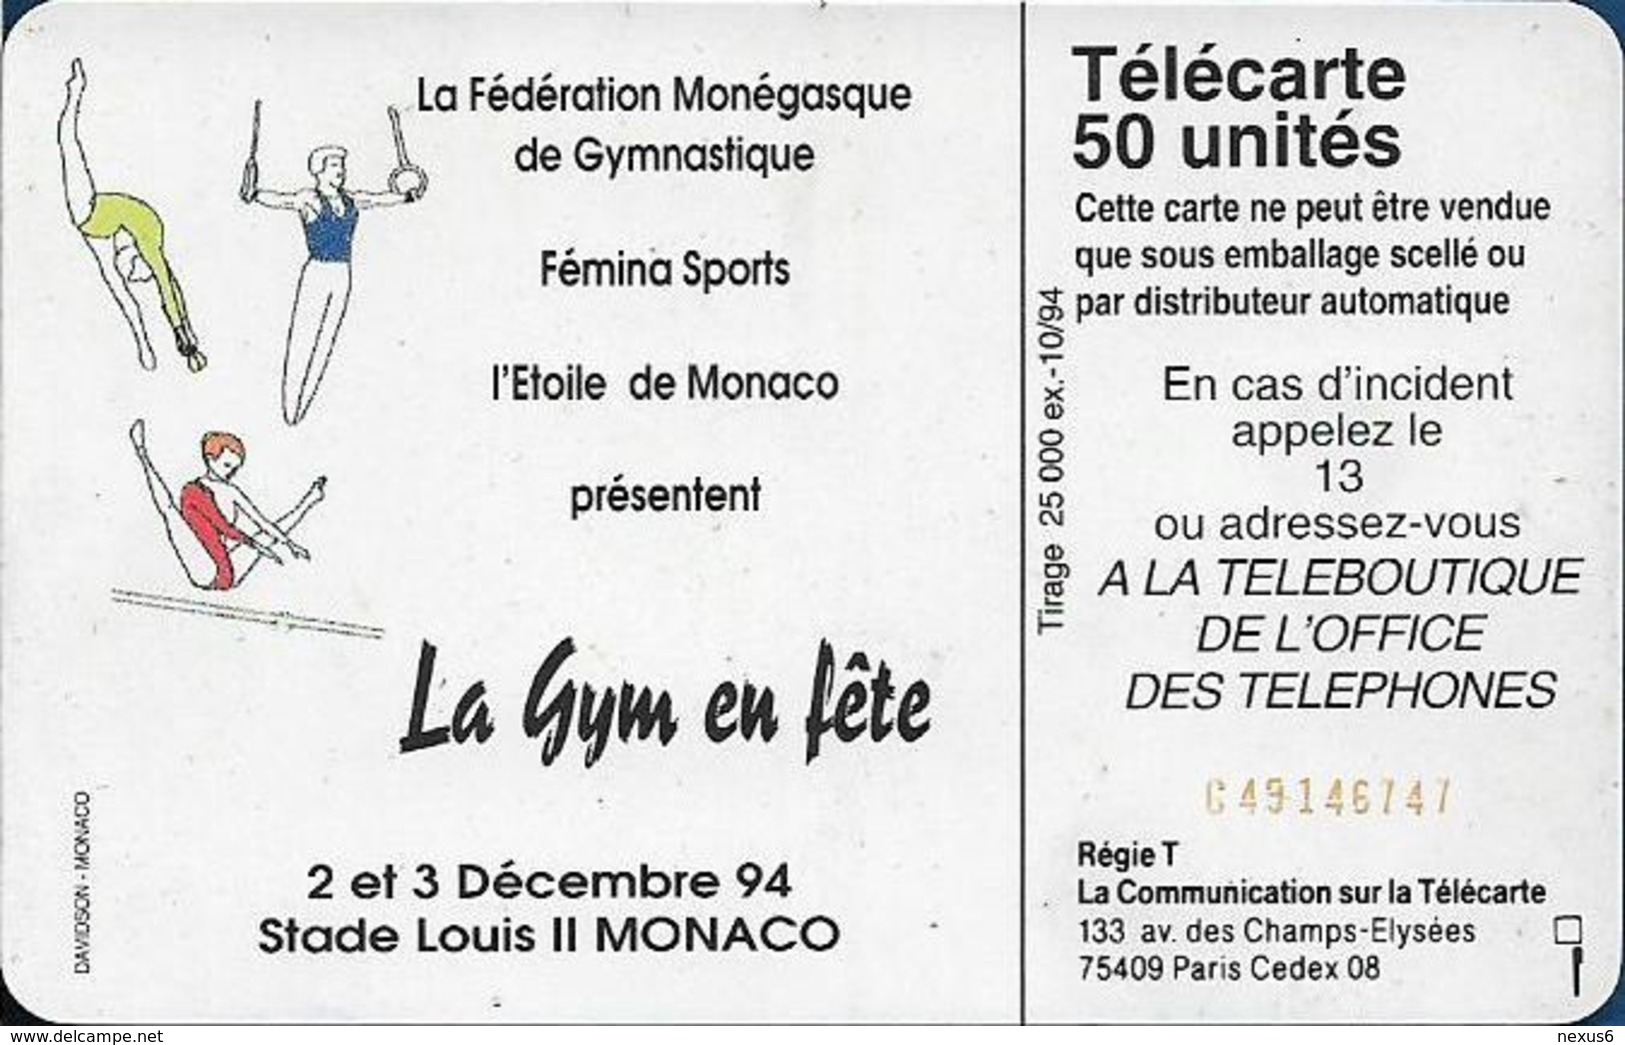 Monaco - MF32 - Gala International Princesse Grace - 10.1994, SC7, 50Units, 25.000ex, Used - Monaco